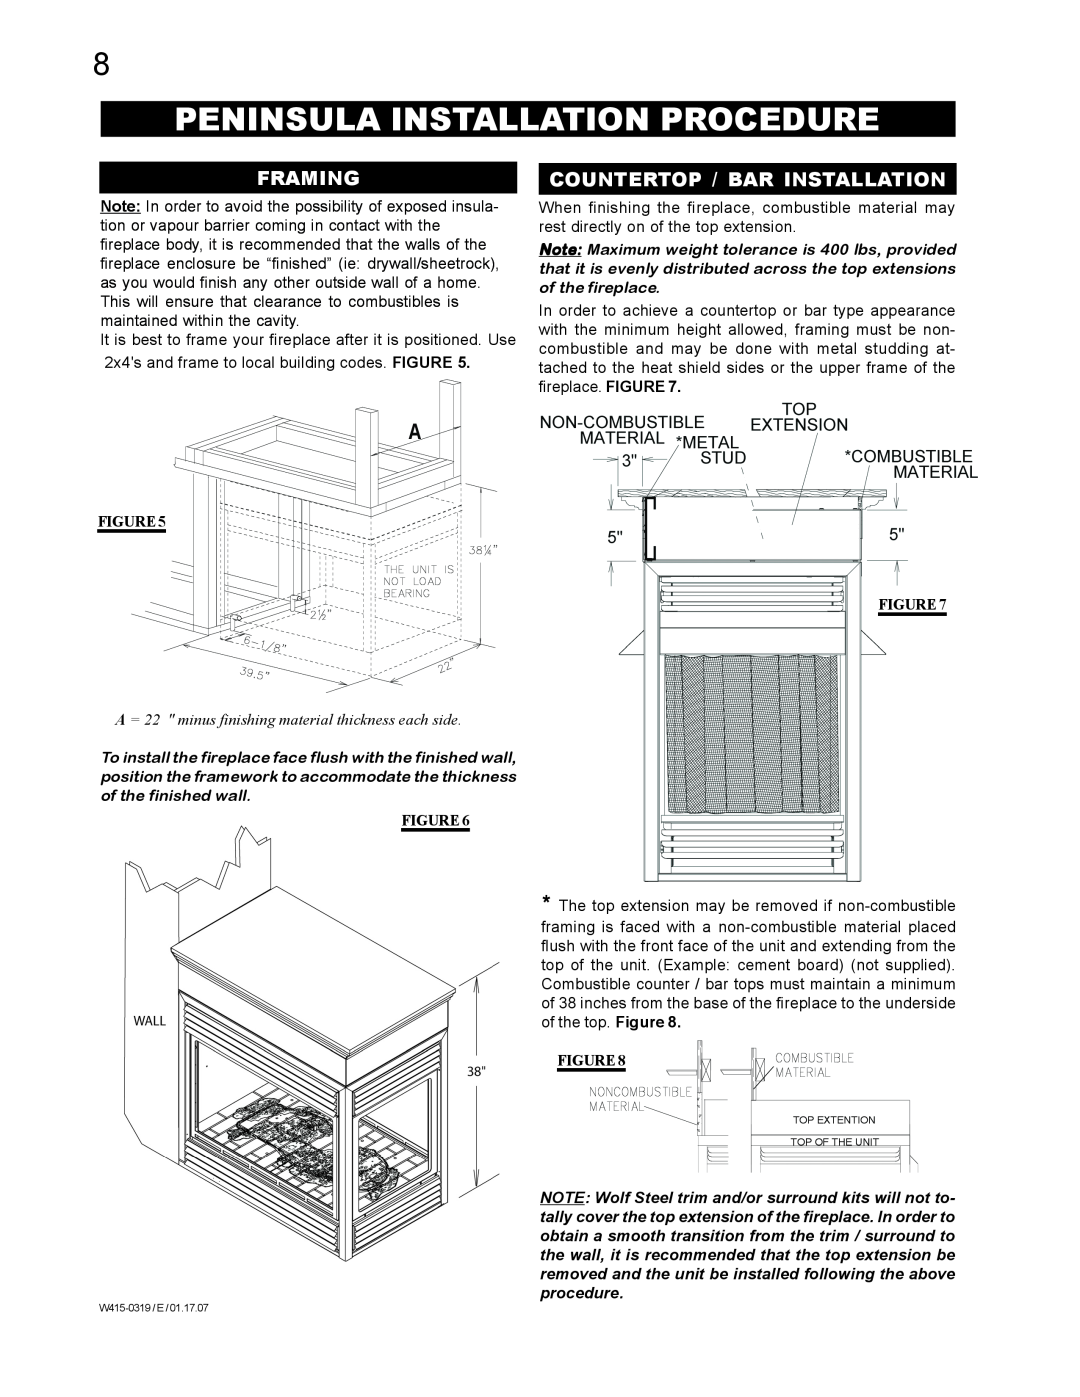 Napoleon Fireplaces fireplaces manual Peninsula Installation Procedure, Framing, Countertop / Bar Installation 